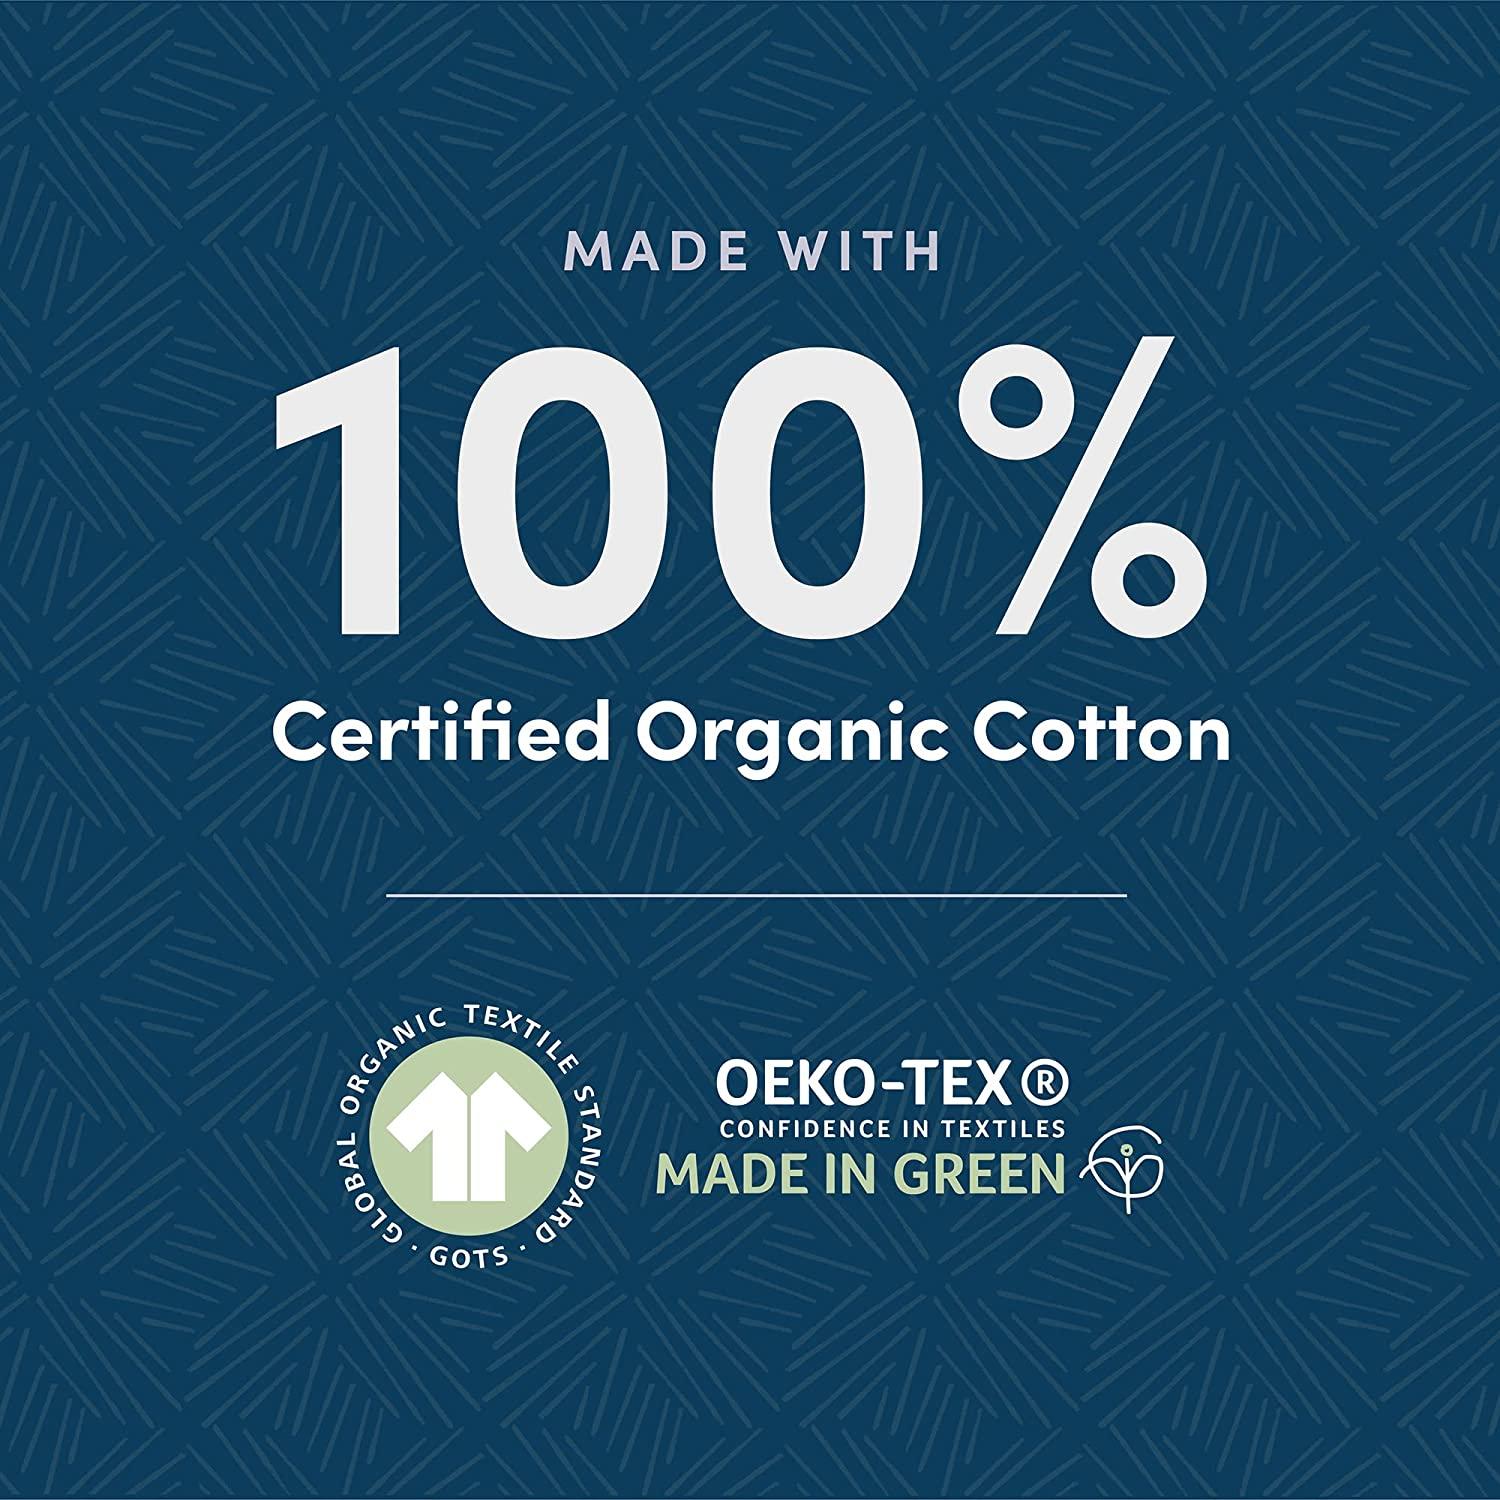 Aware 100% Organic Cotton Plush Bath Towels - Bath Towels, 4-Pack, Dark Gray